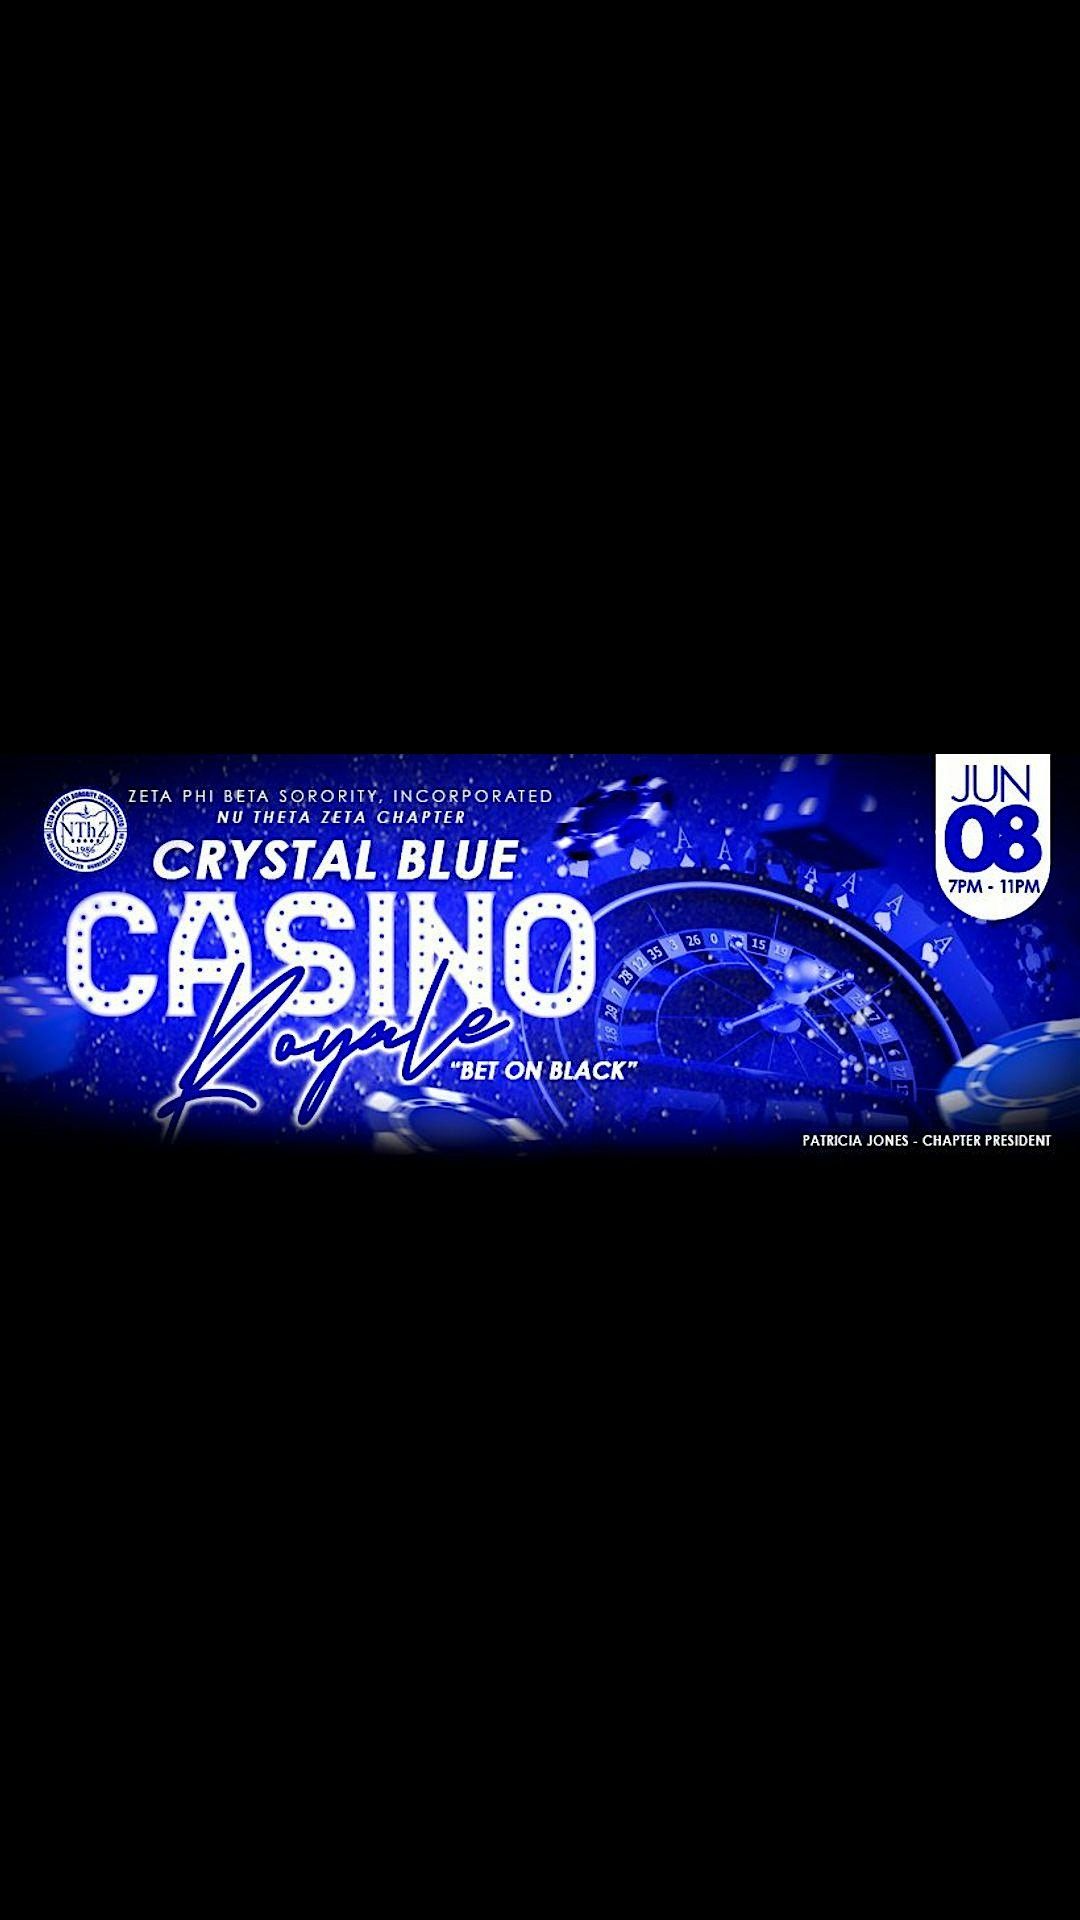 Crystal Blue Casino Royale "Bet on Black"